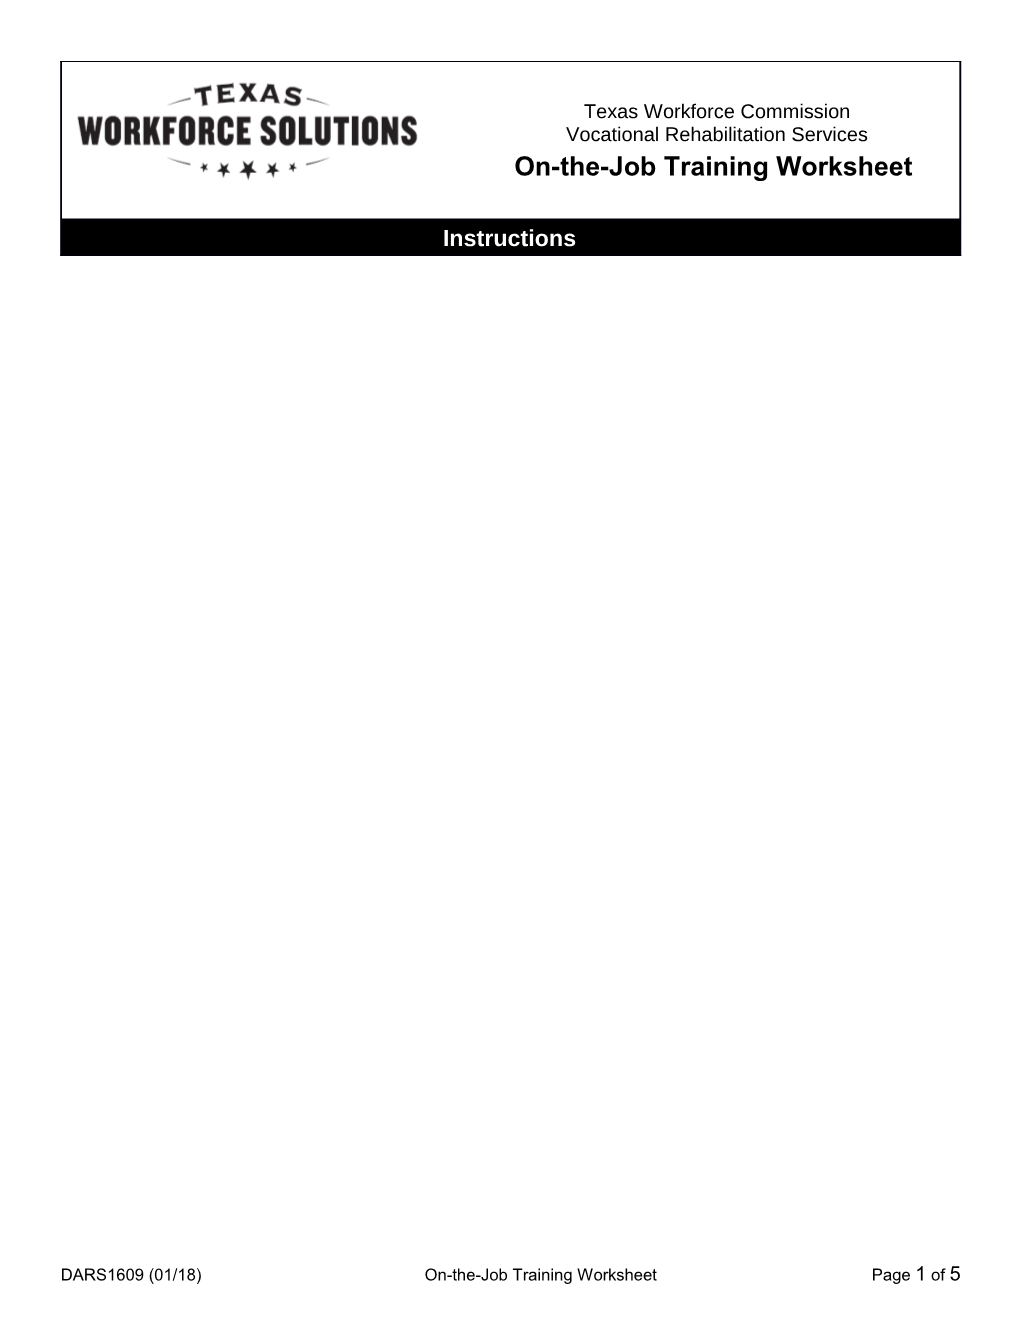 DARS1609 On-The-Job Training Worksheet